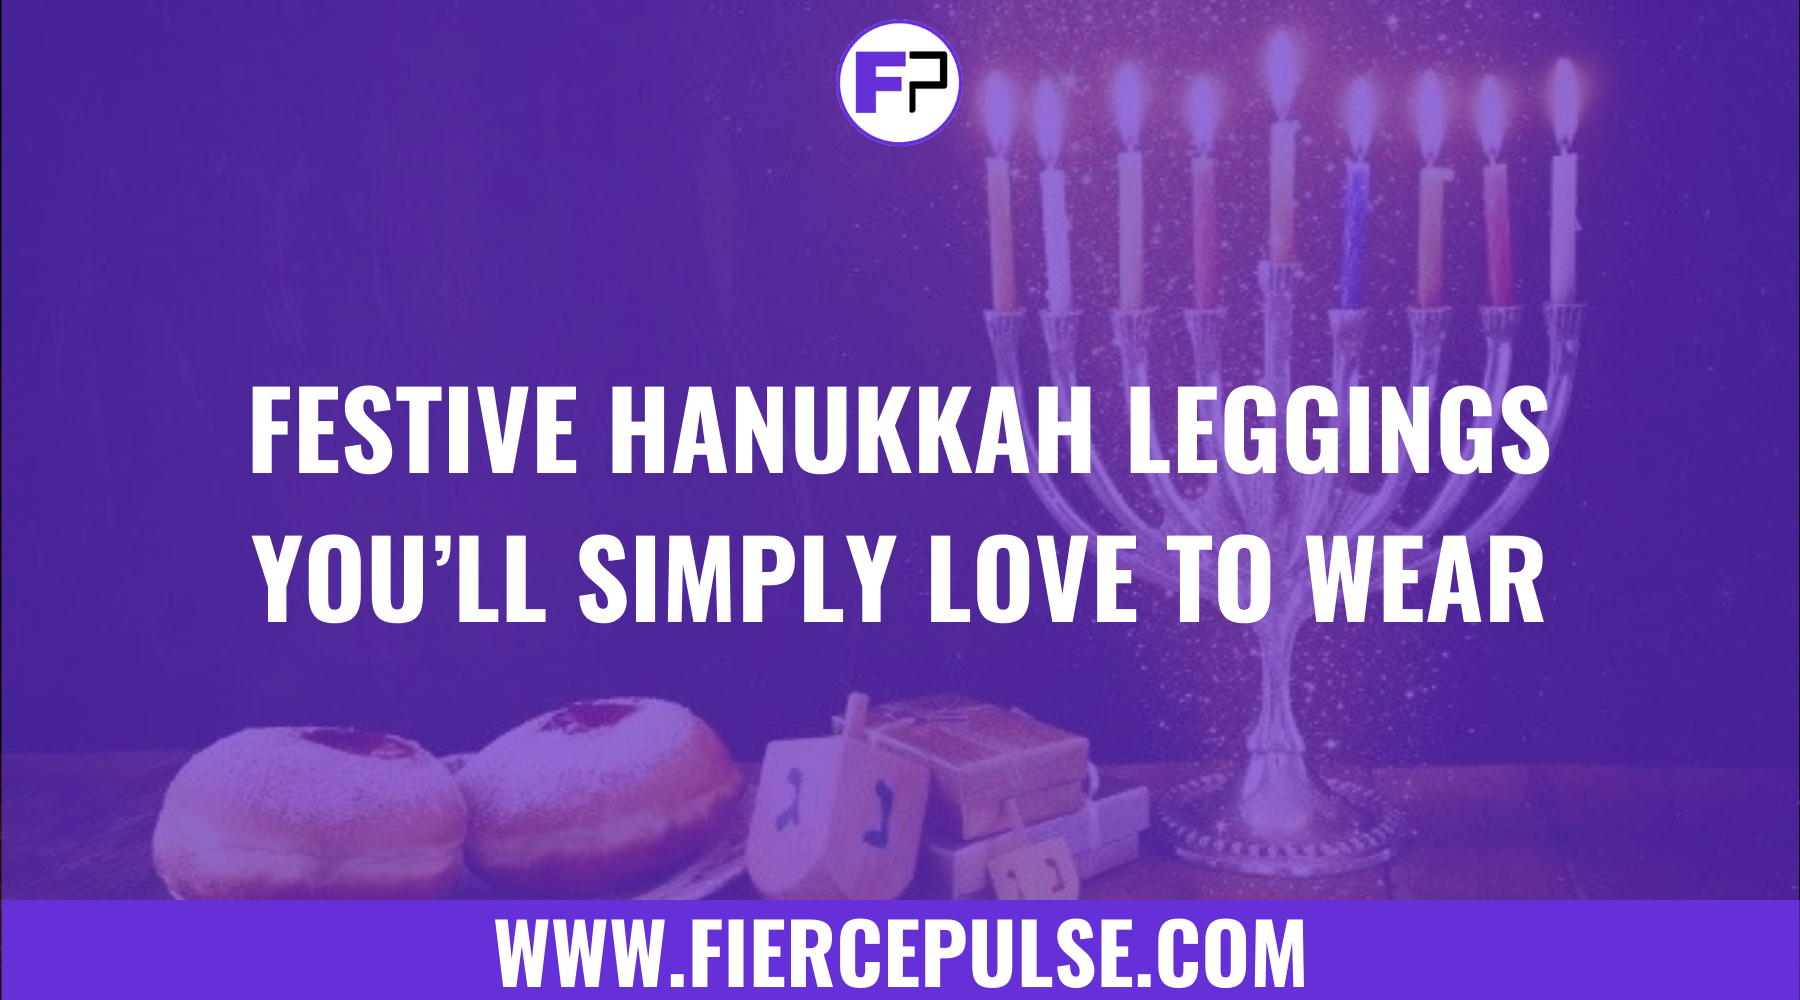 Festive Hanukkah Leggings You’ll Simply Love To Wear